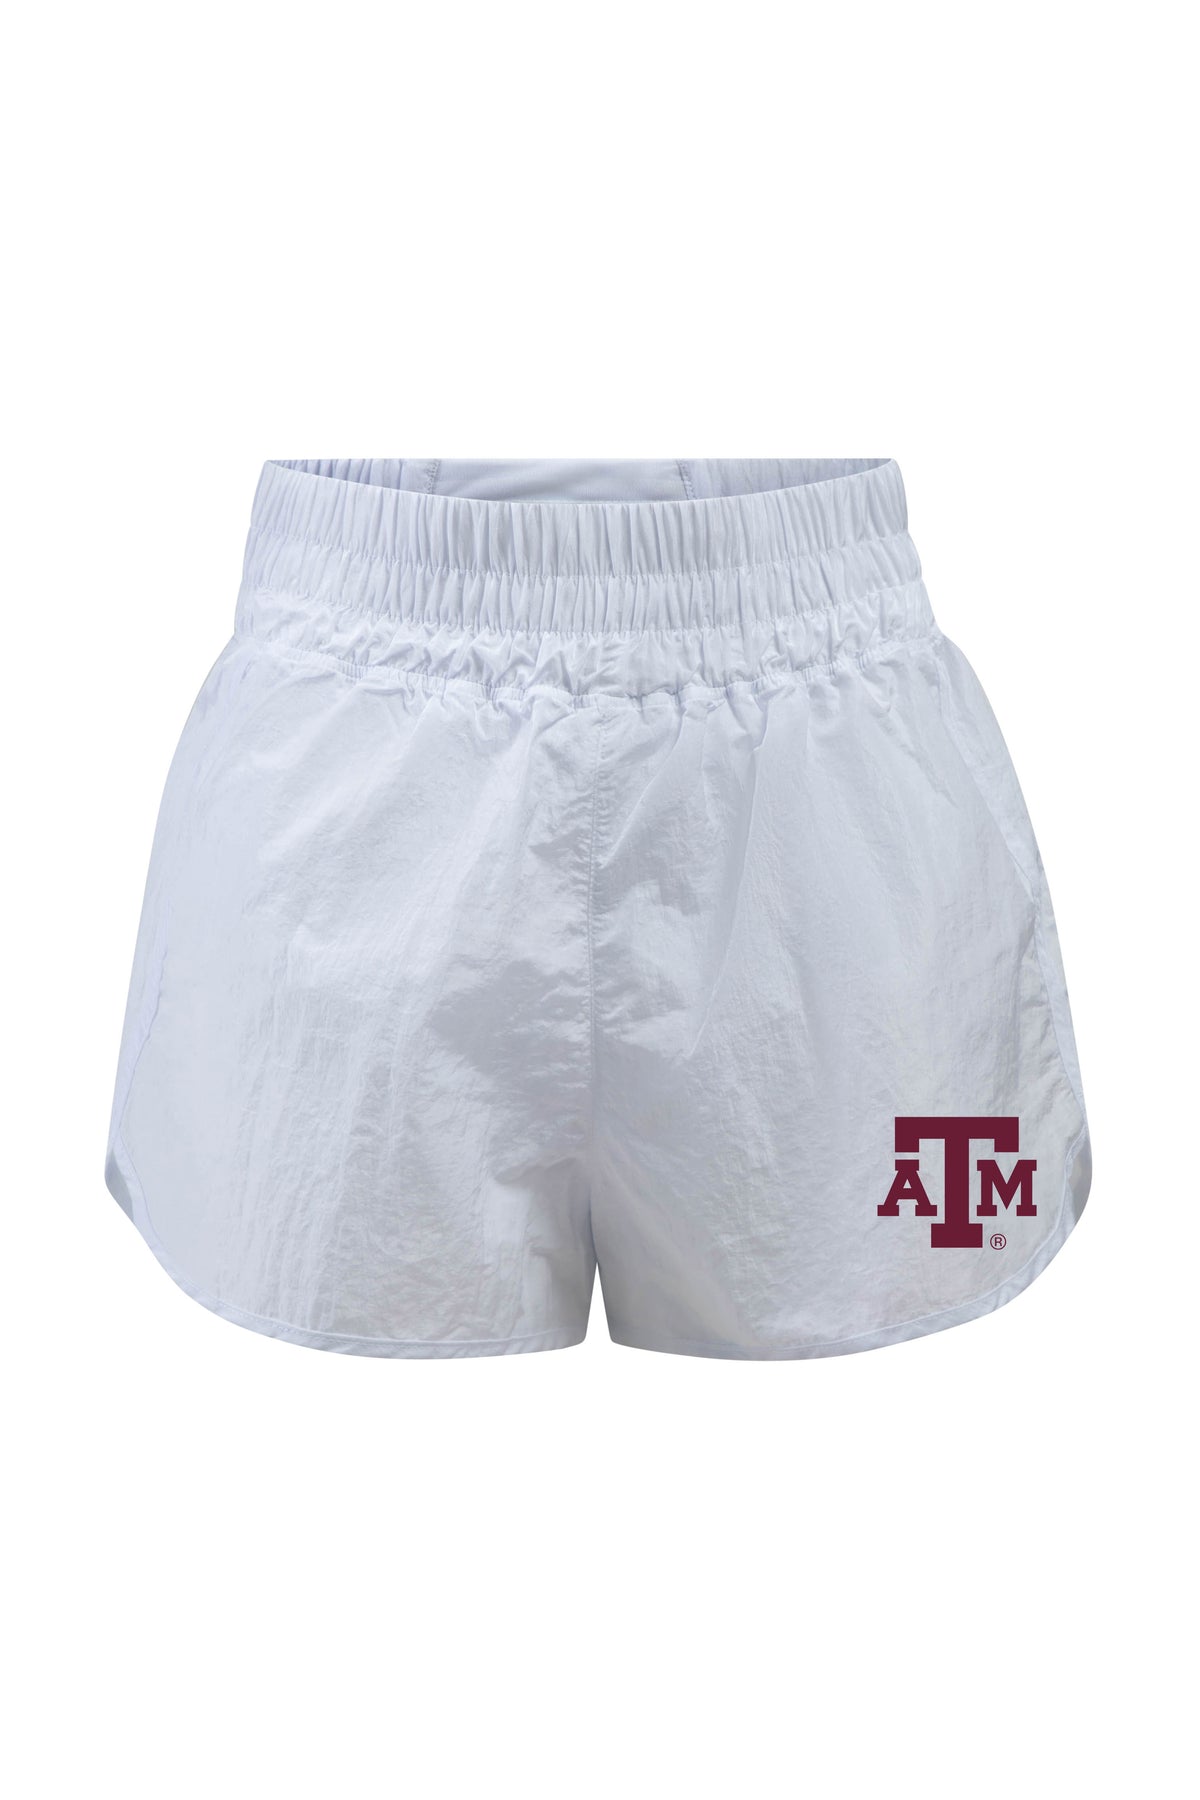 Texas A&M University Boxer Short